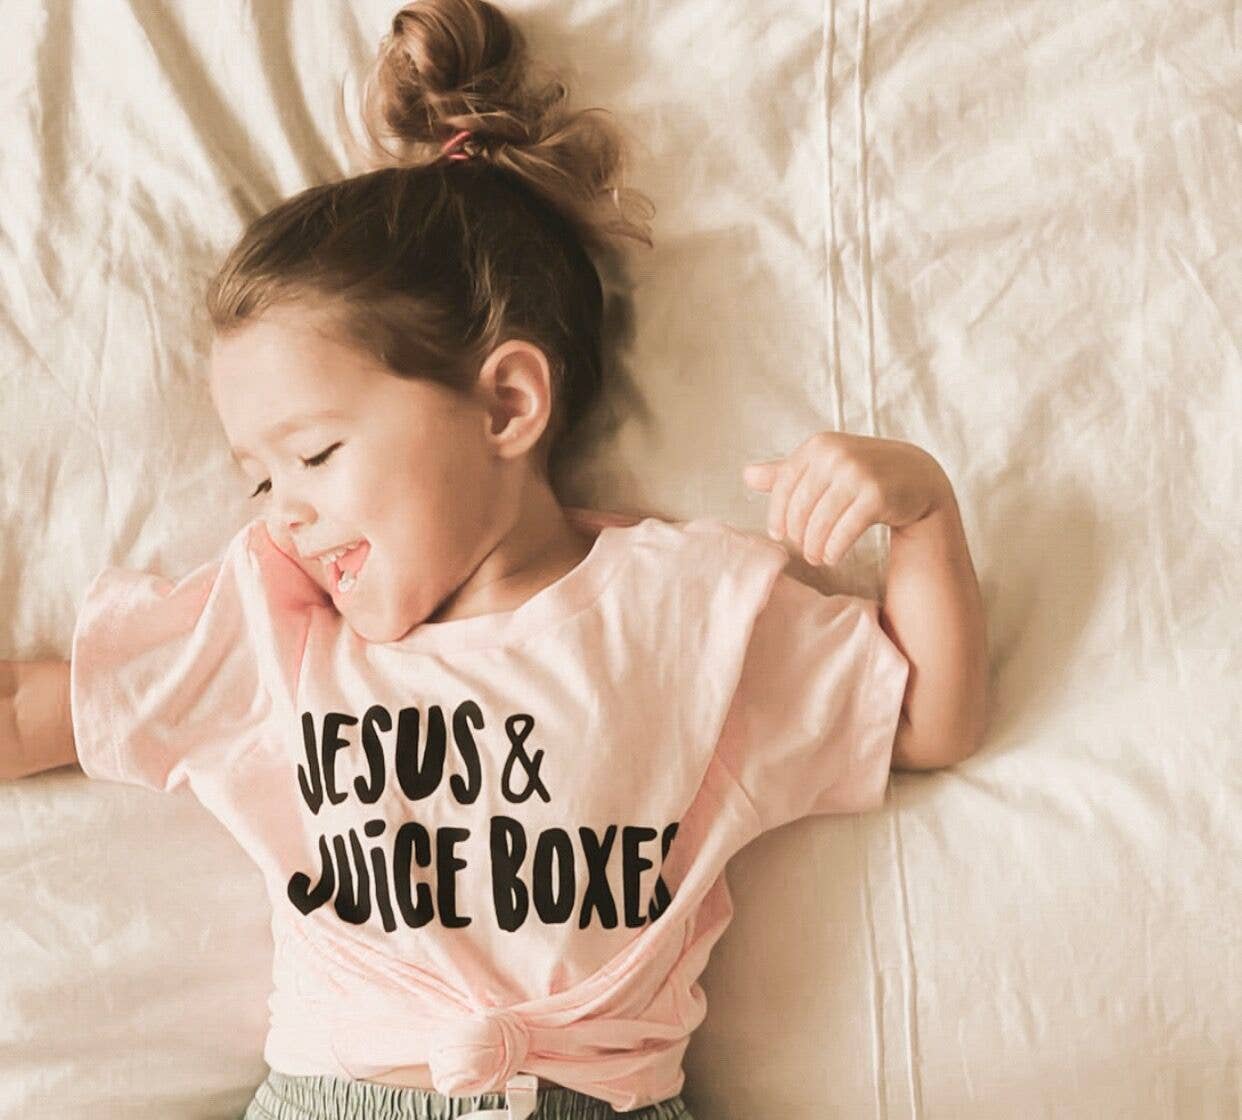 Jesus & Juice Box Kid t-shirts